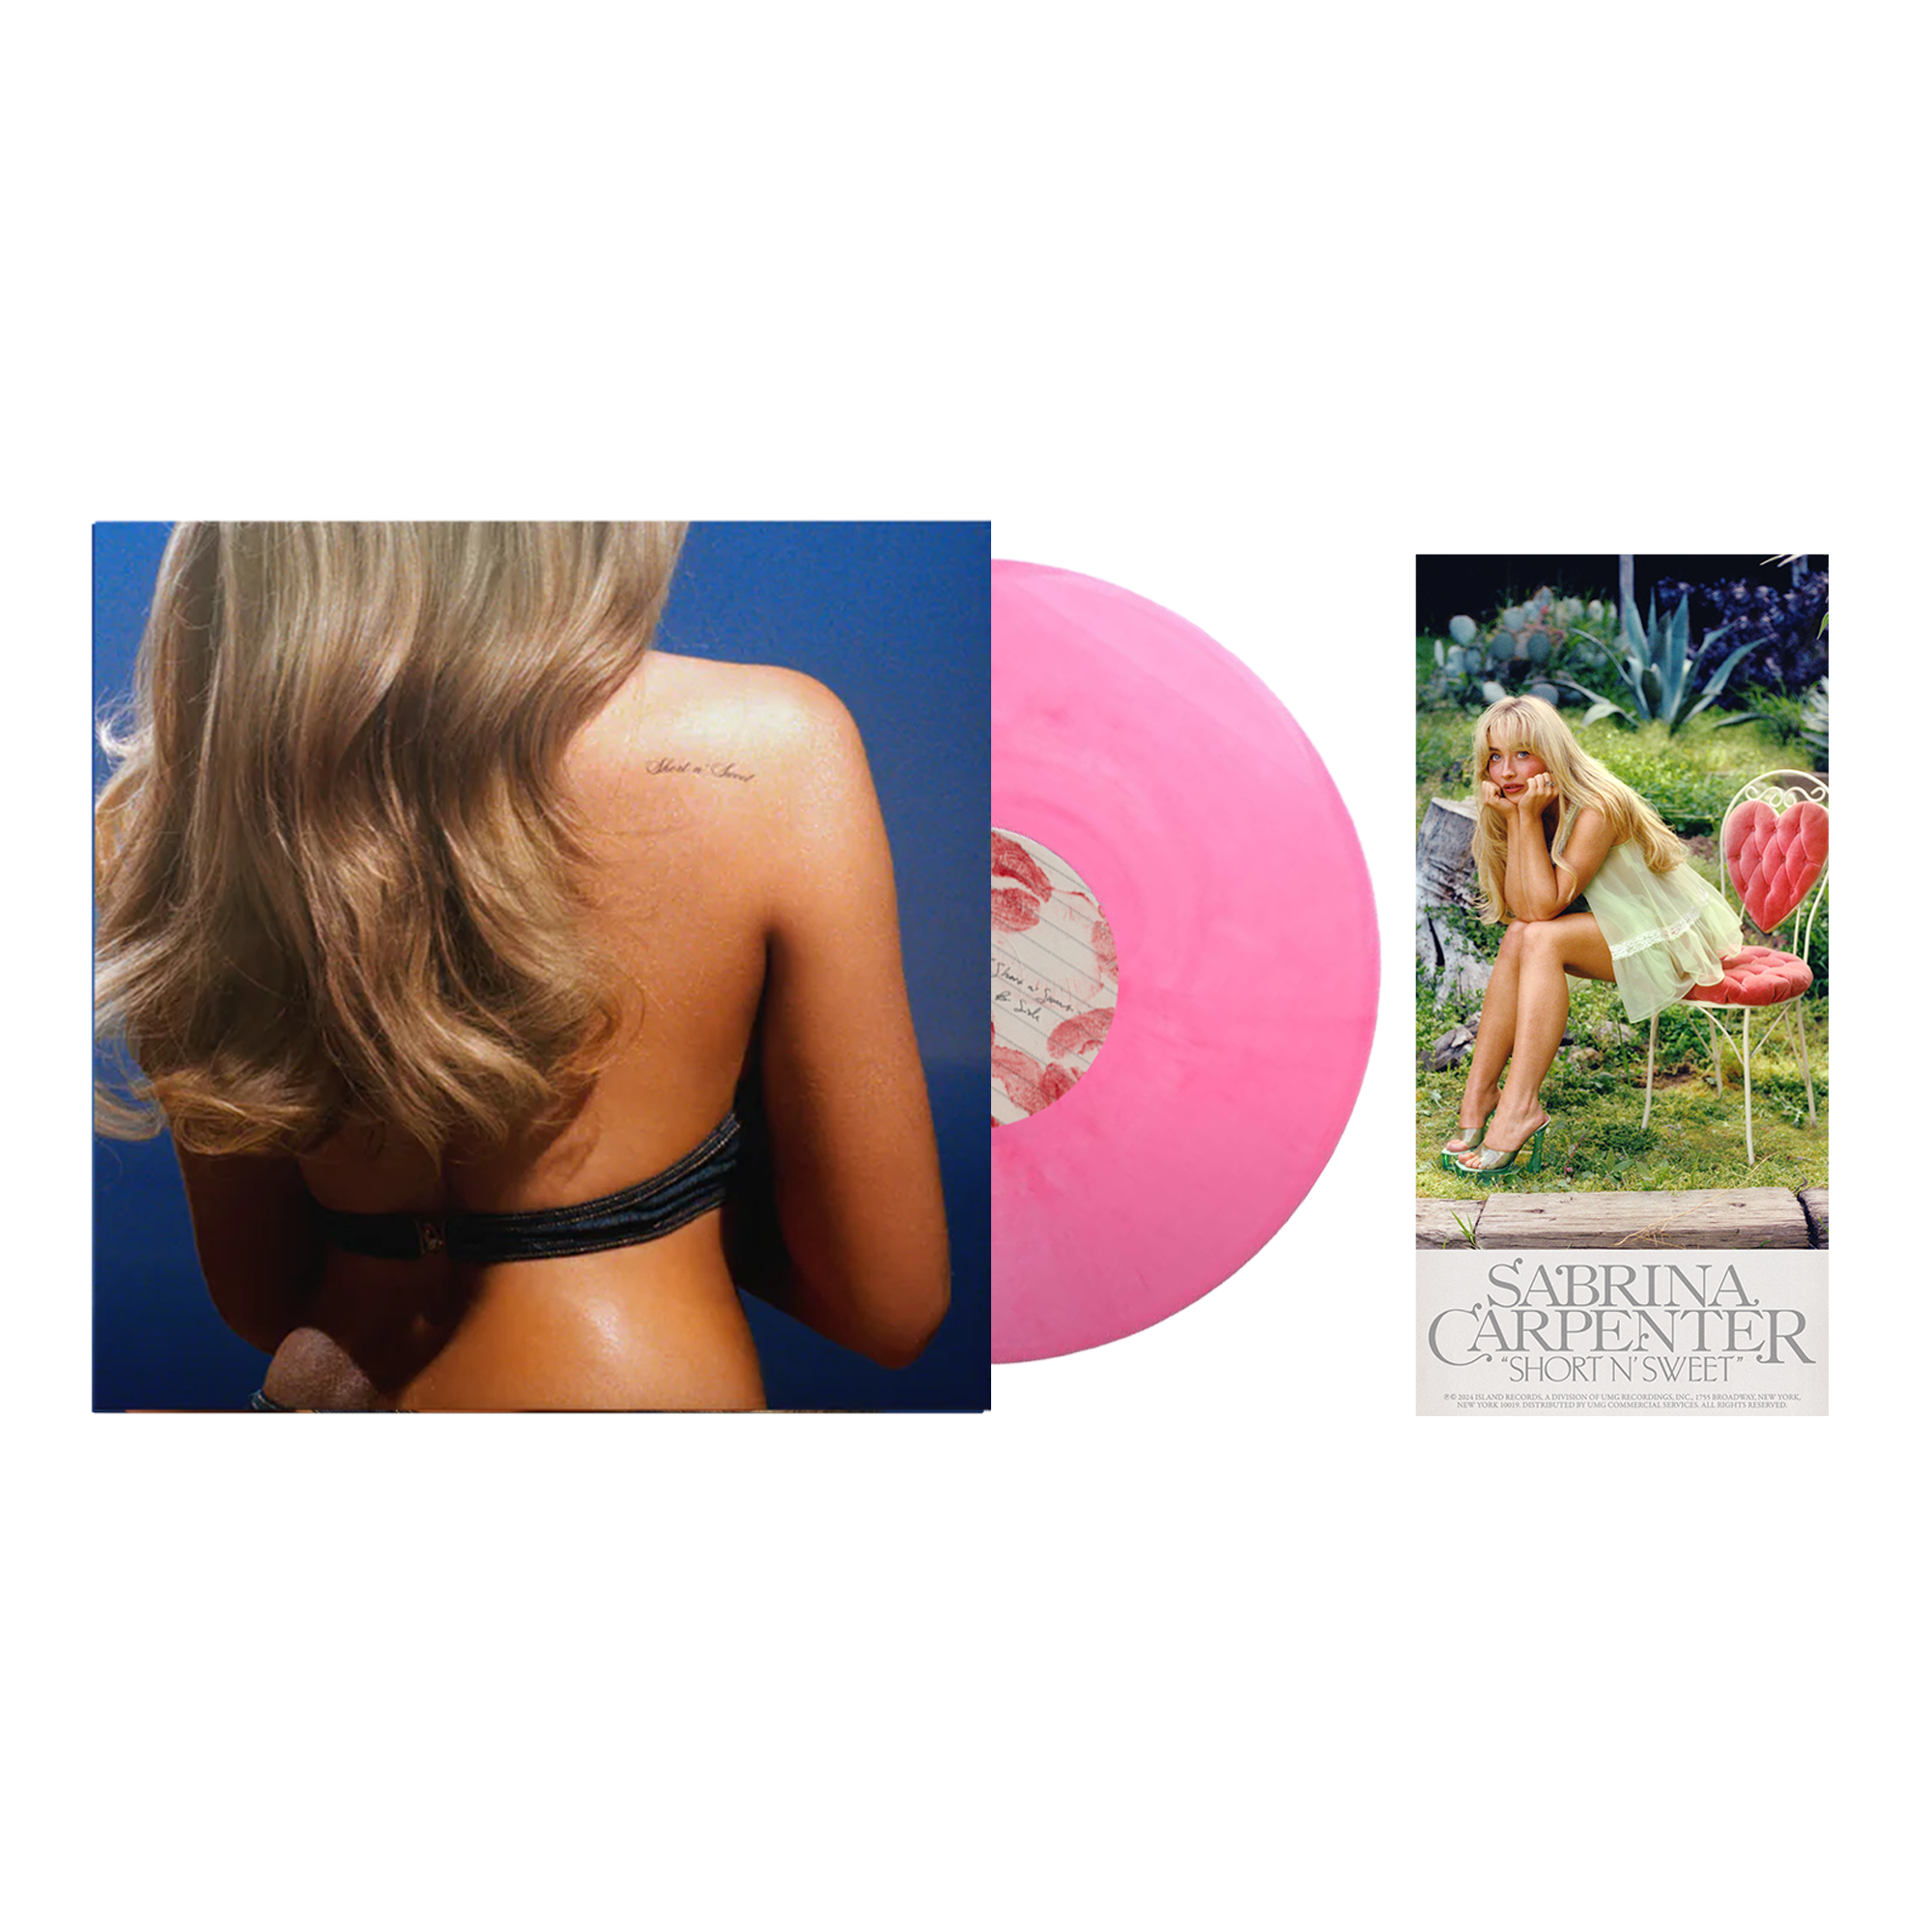 Sabrina Carpenter - Short n' Sweet: Limited Pink Vinyl LP (w/ Poster)